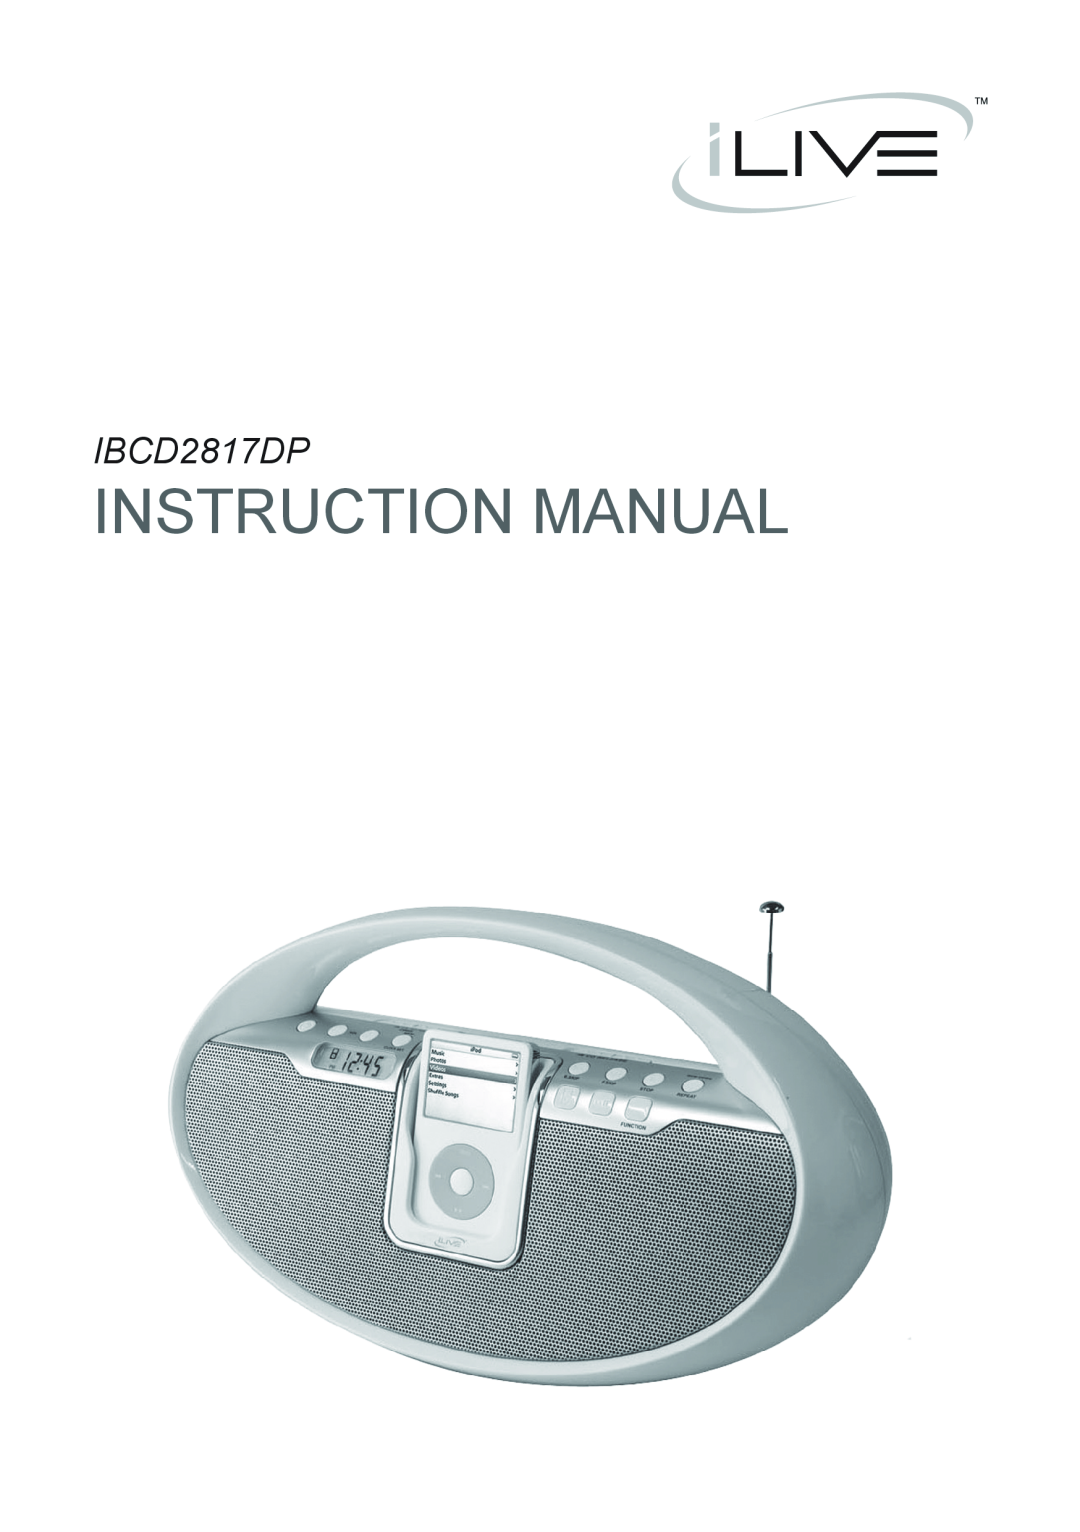 iLive IBCD2817DP instruction manual 